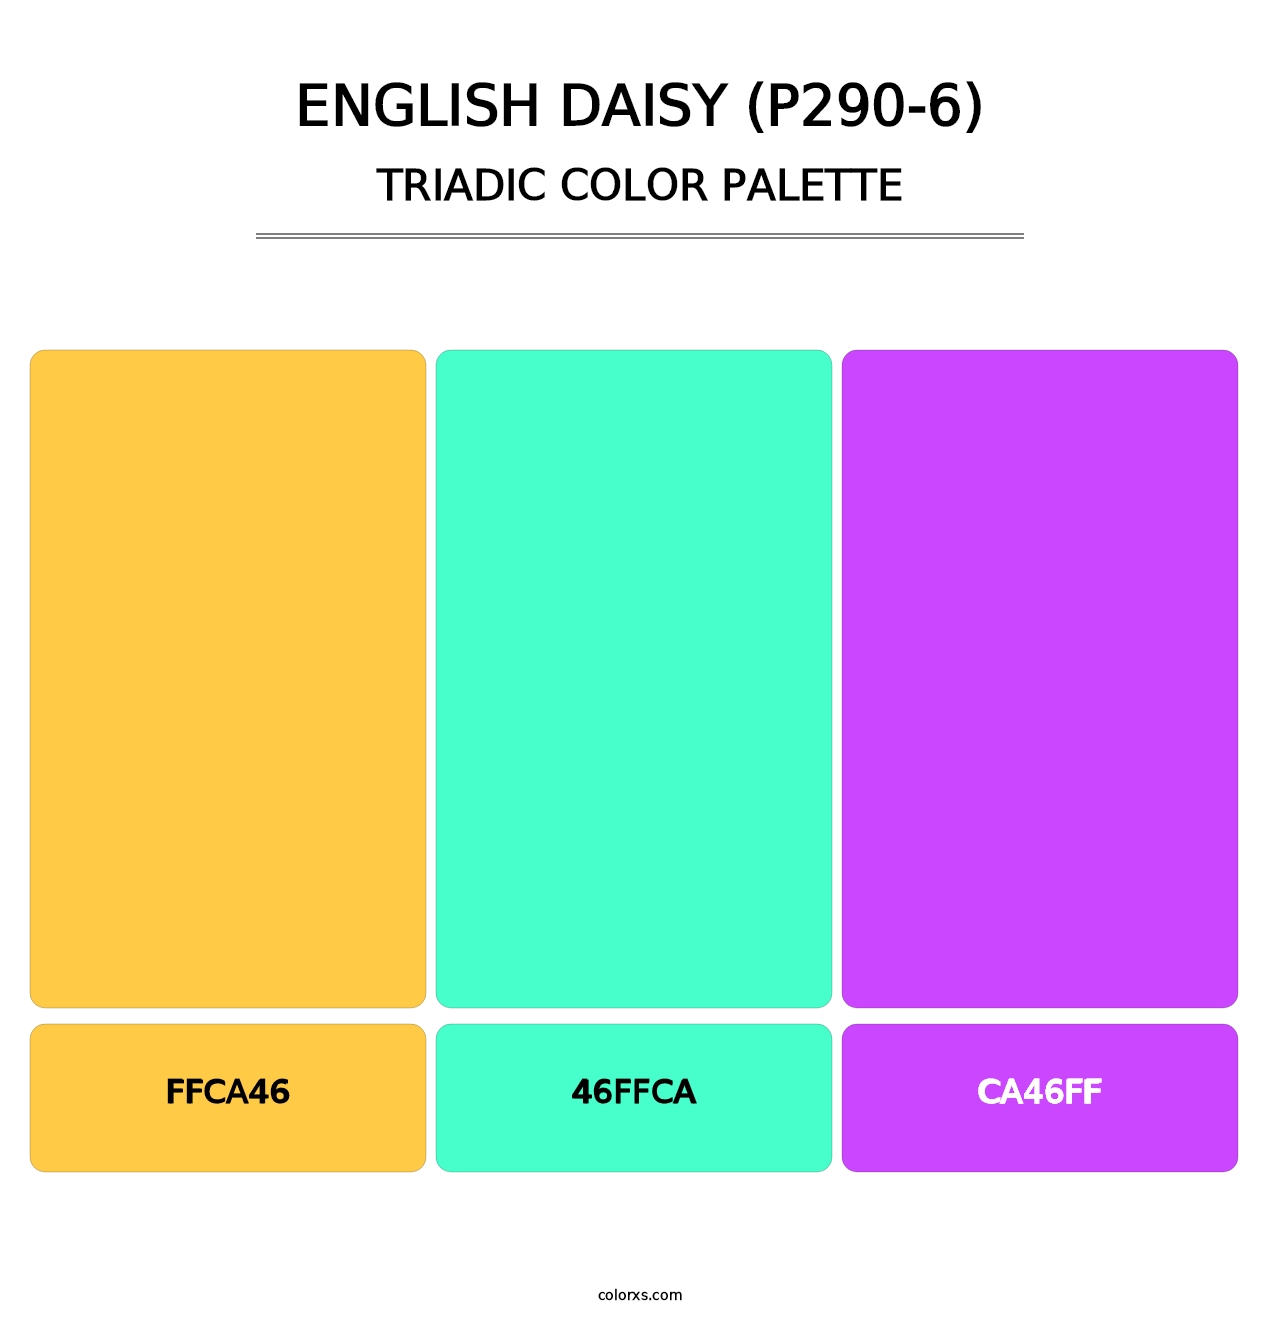 English Daisy (P290-6) - Triadic Color Palette